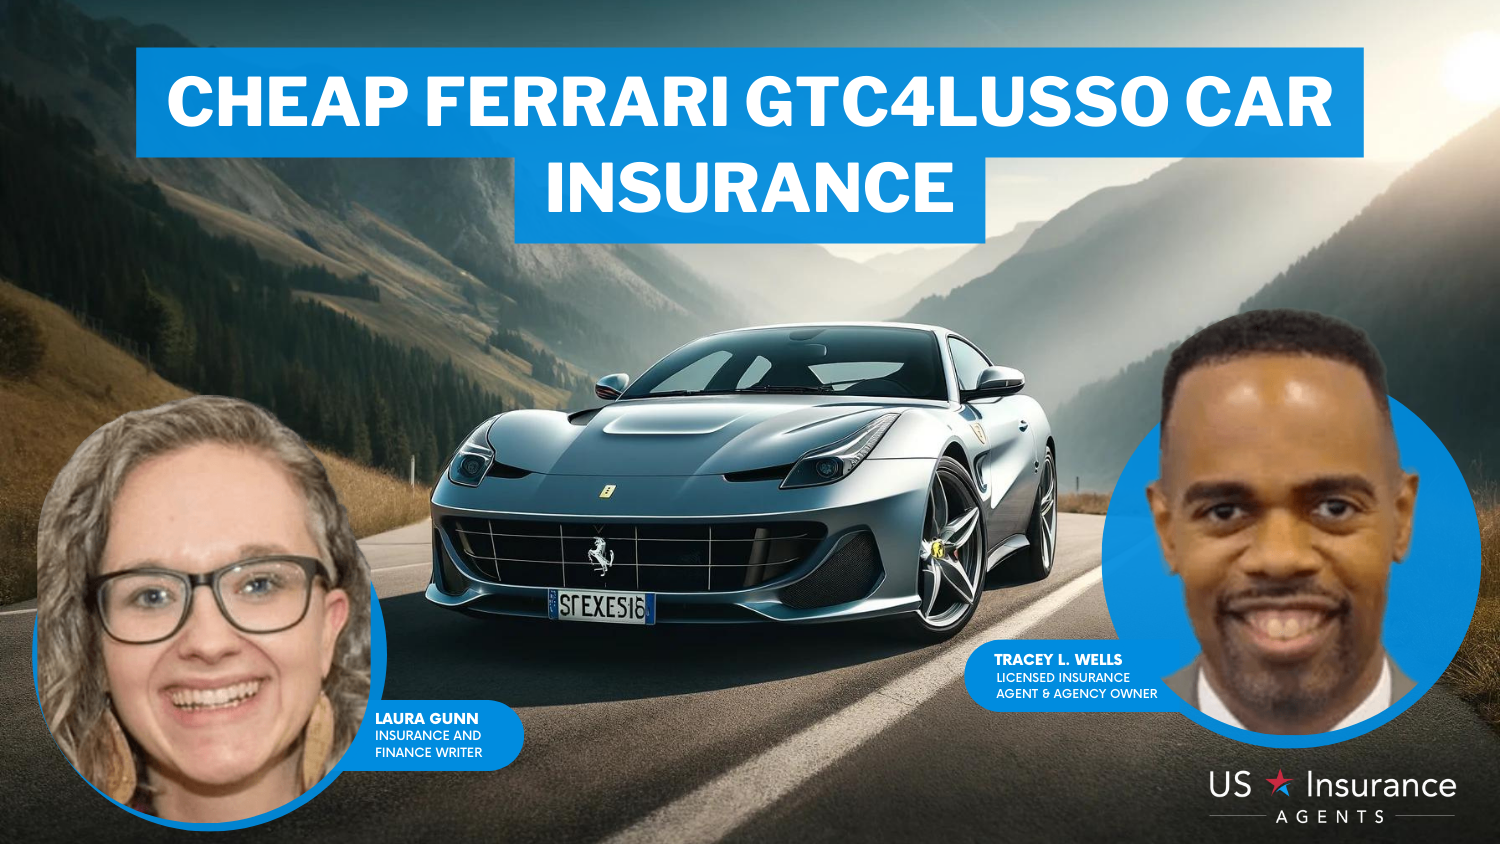 Cheap Ferrari GTC4Lusso Car Insurance: Chubb, USAA, and Hagerty